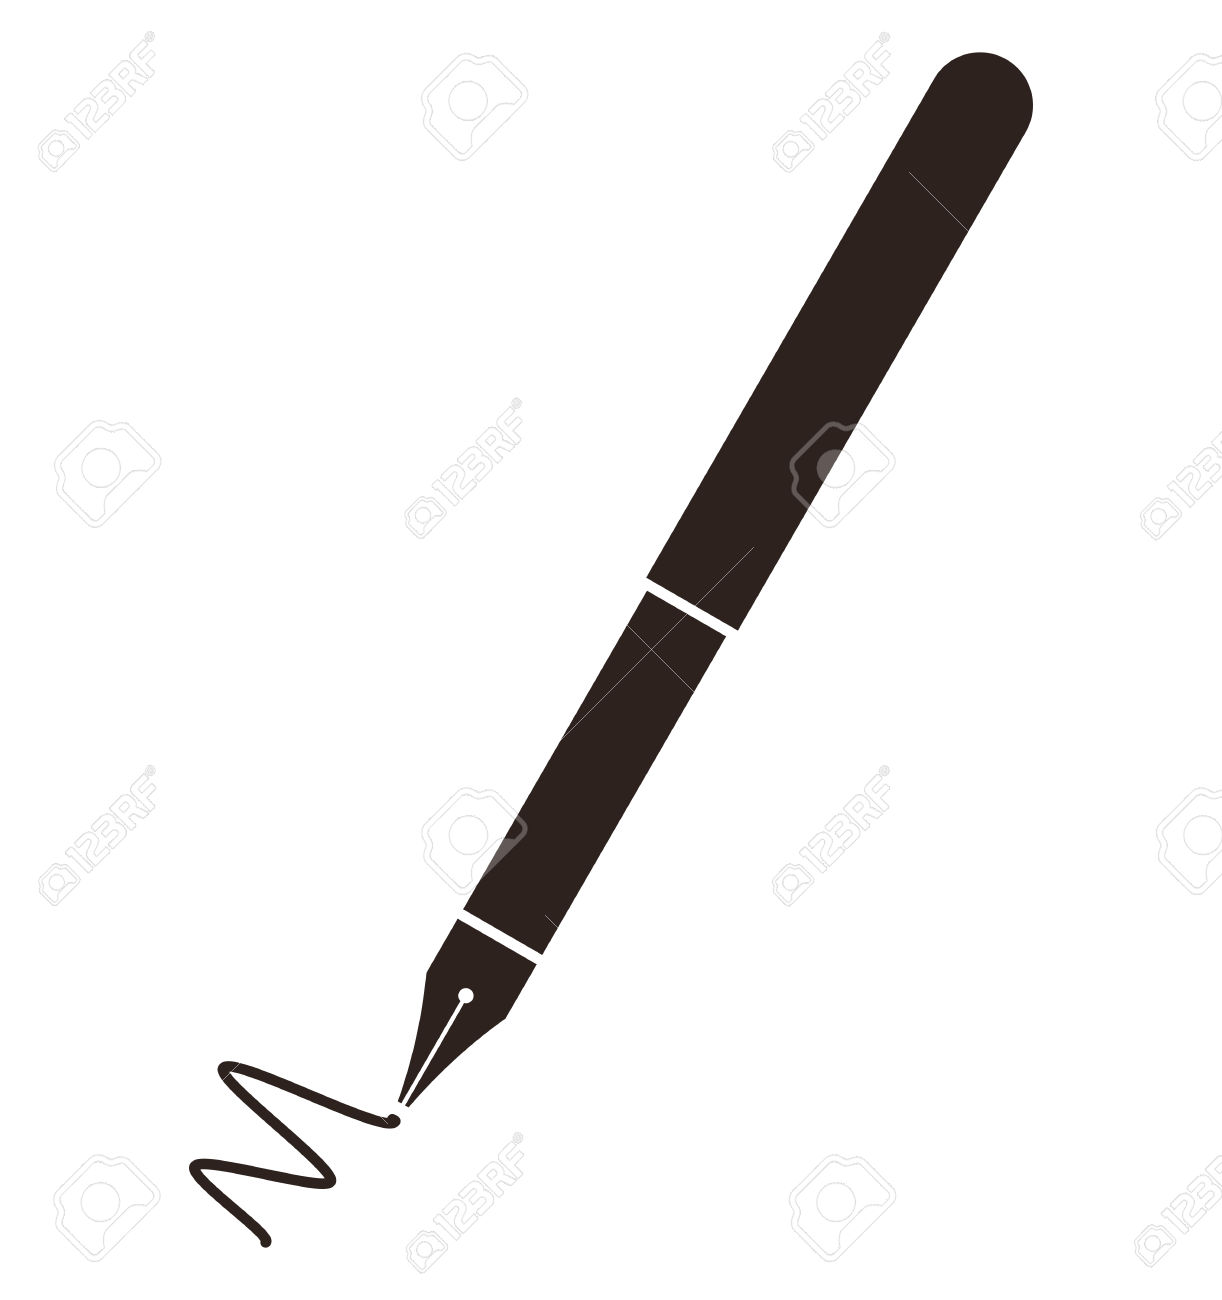 Ink pen outline clipart